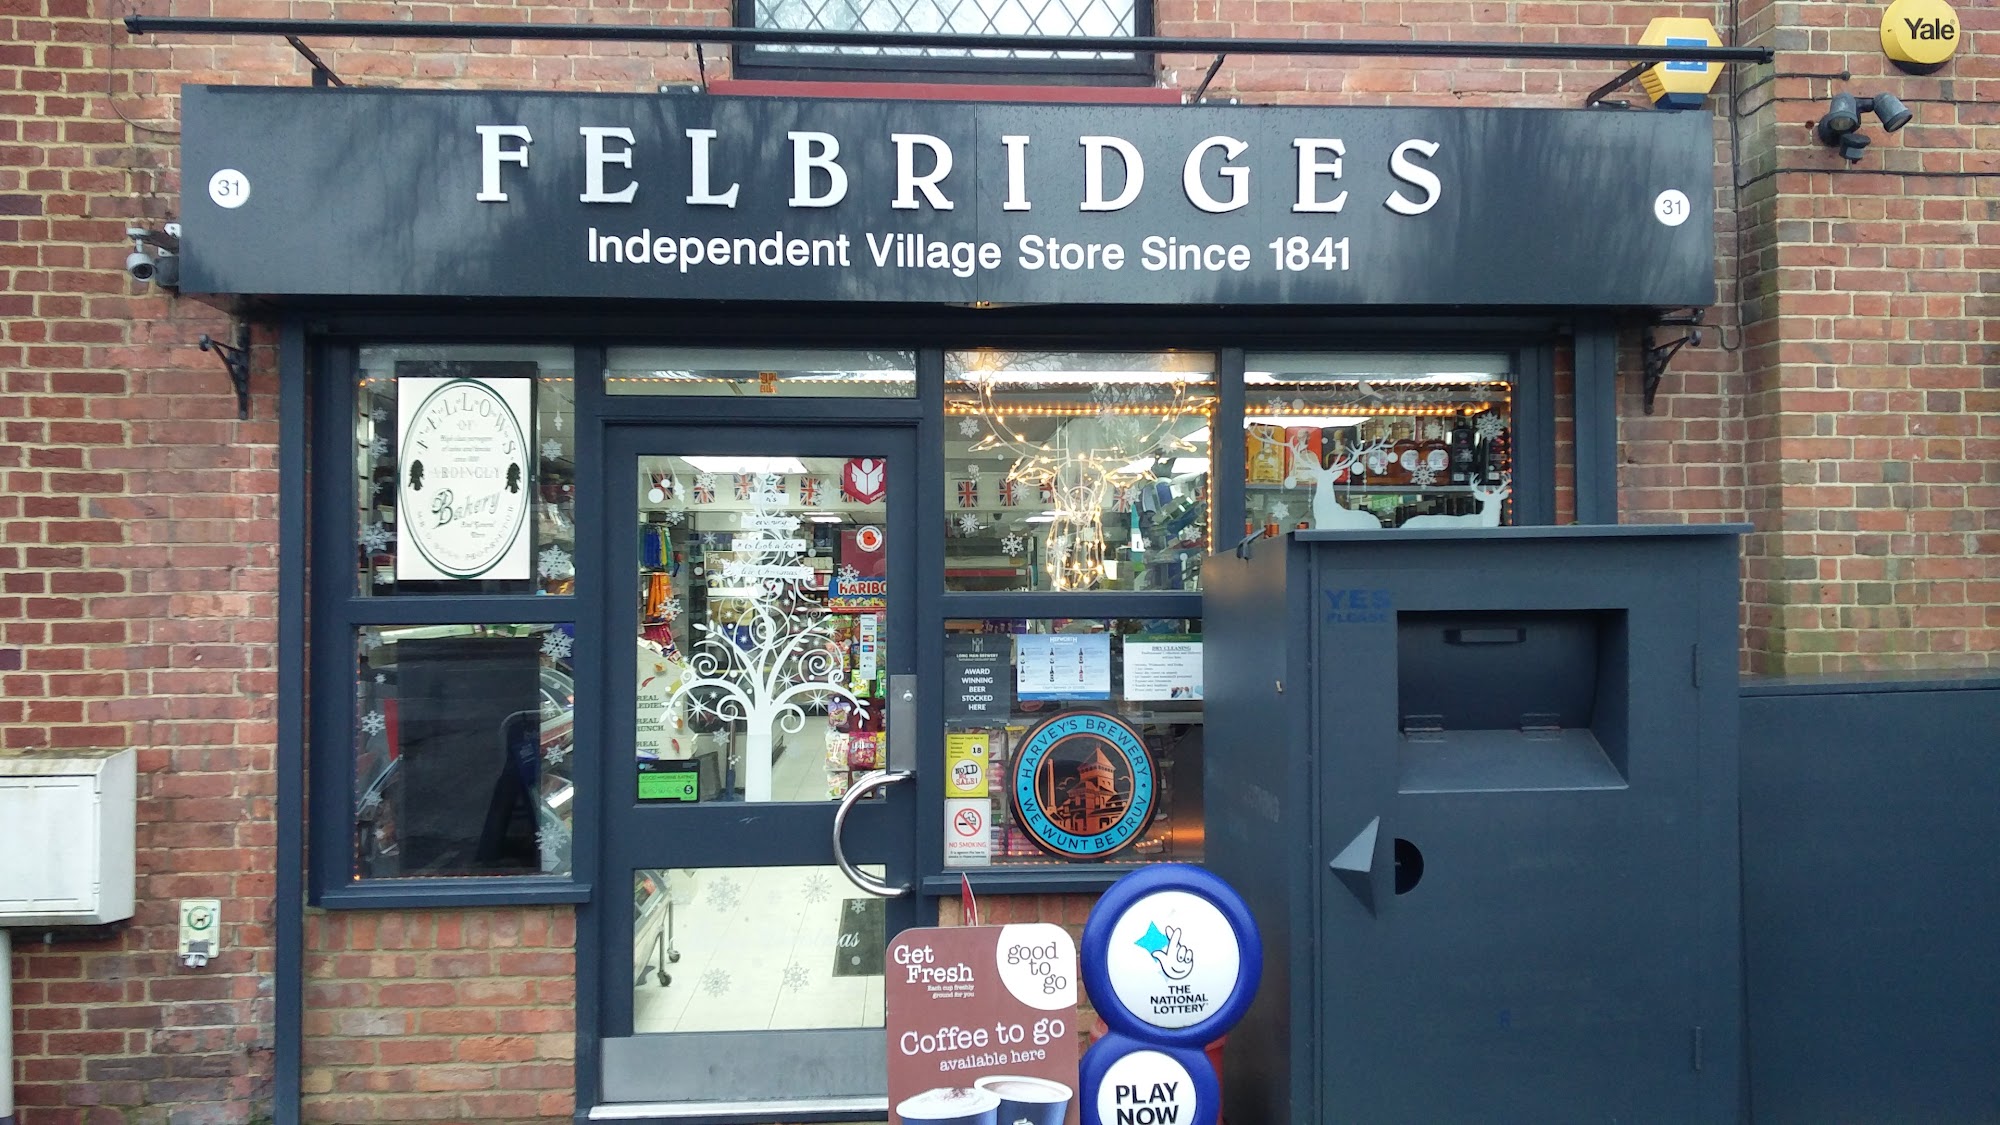 FELBRIDGES Independent Village Store since 1841